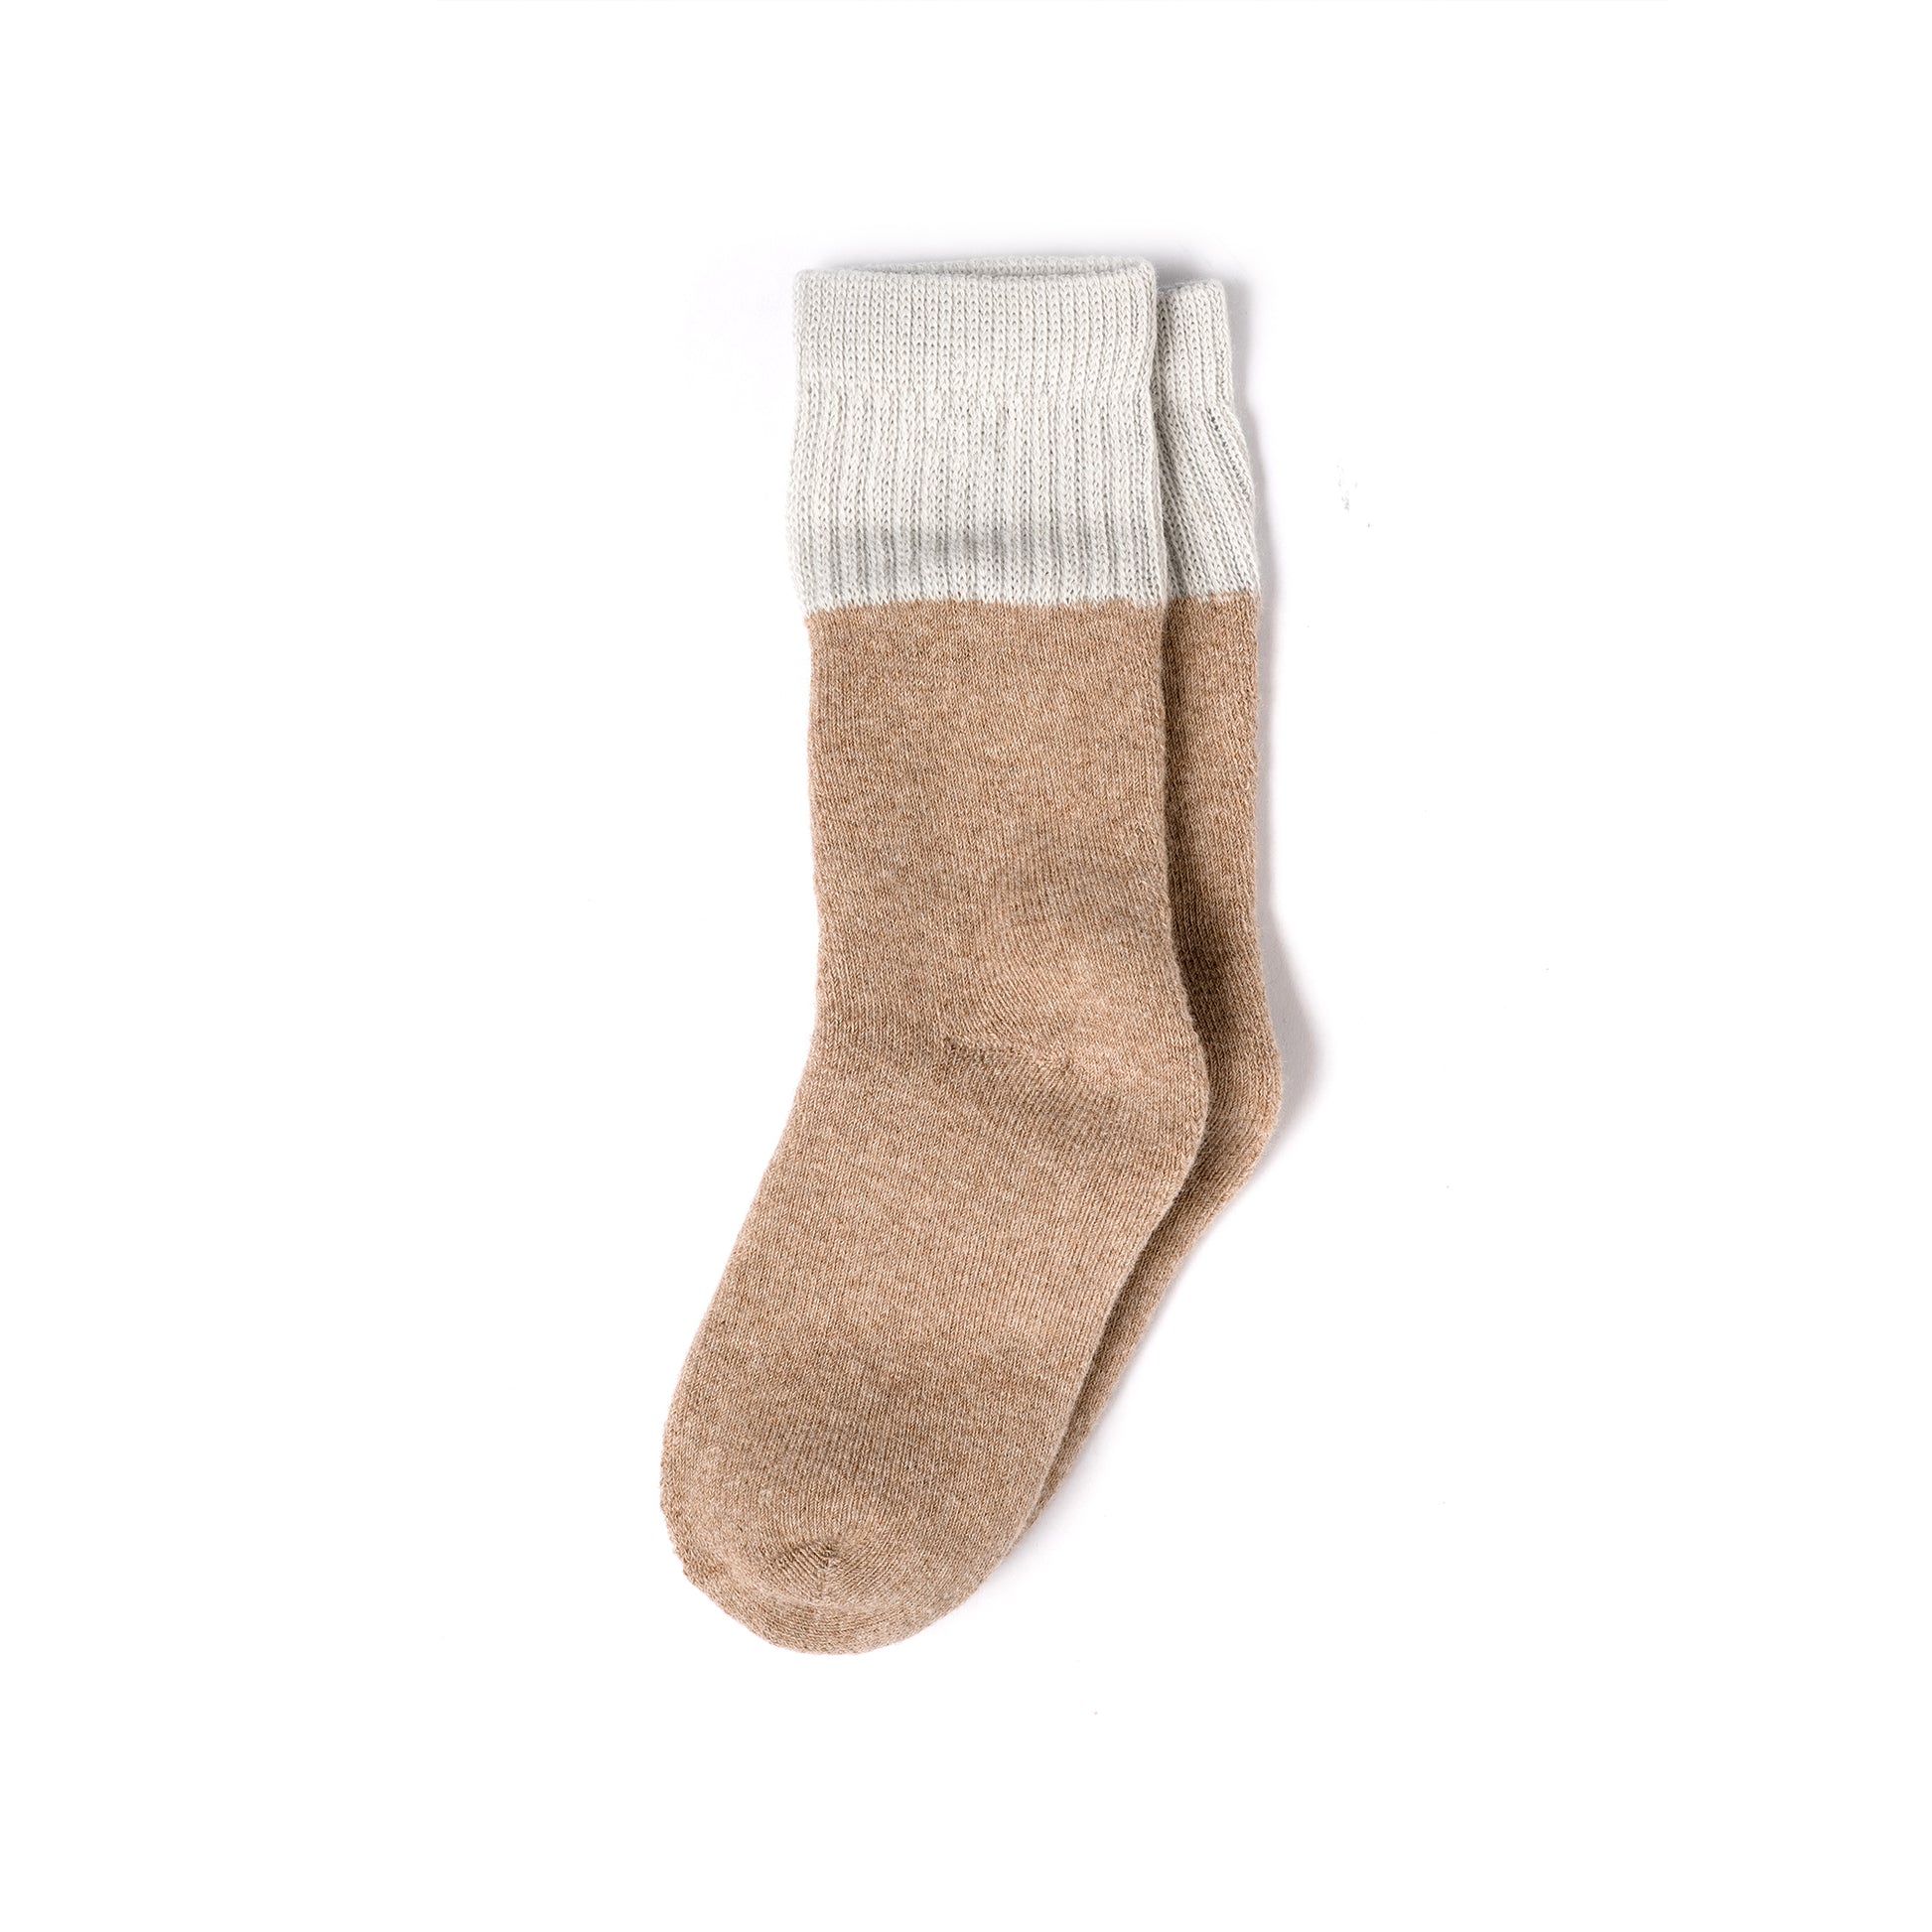 PINENUT Socks - Shop Online | shooshoos.co.za